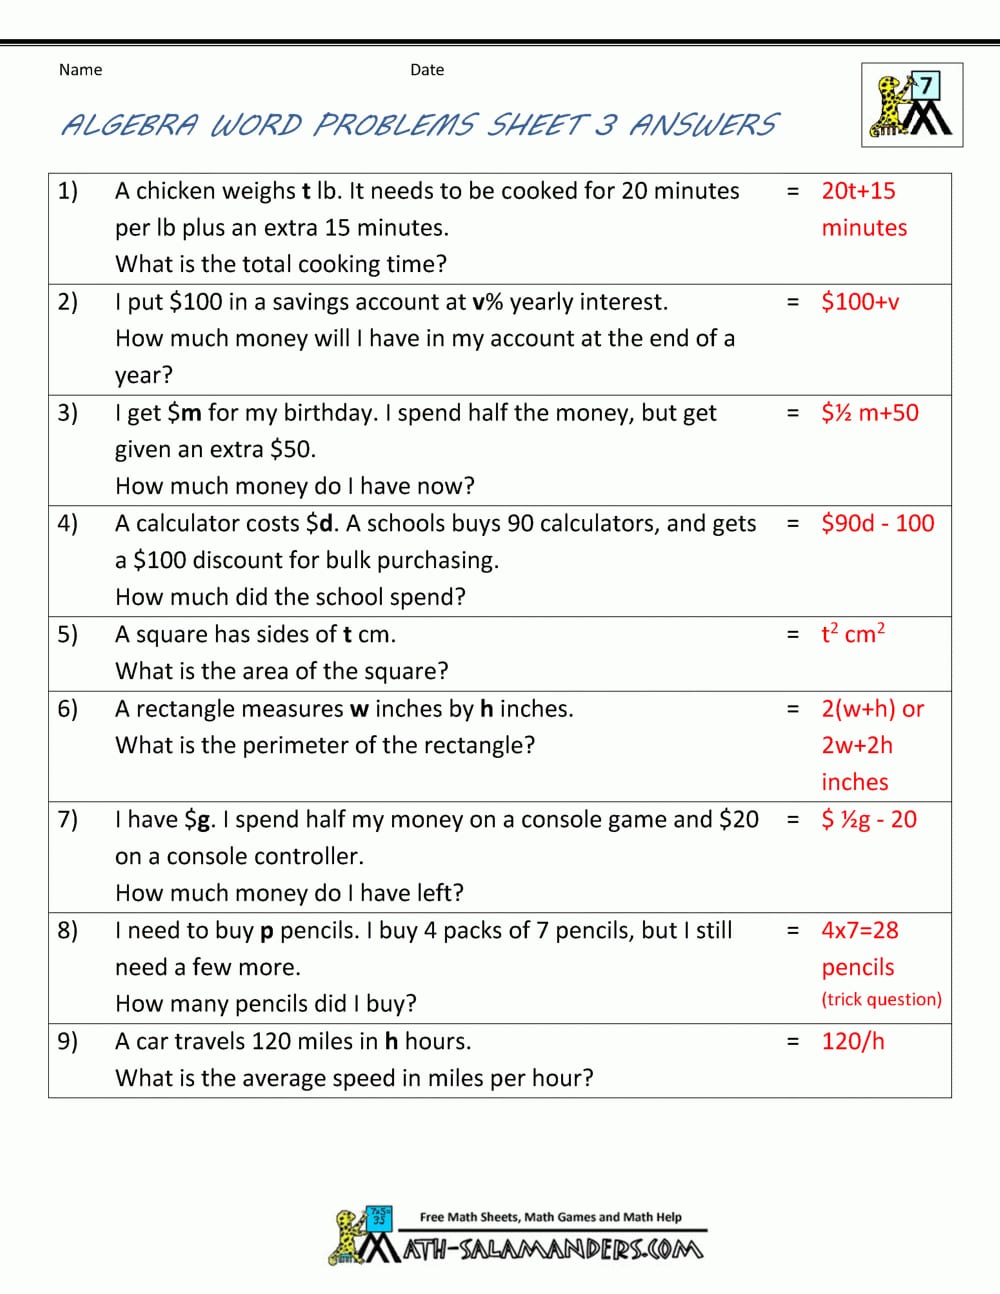 Basic Algebra Worksheets Regarding Solving Problems Algebraically Worksheet Answers